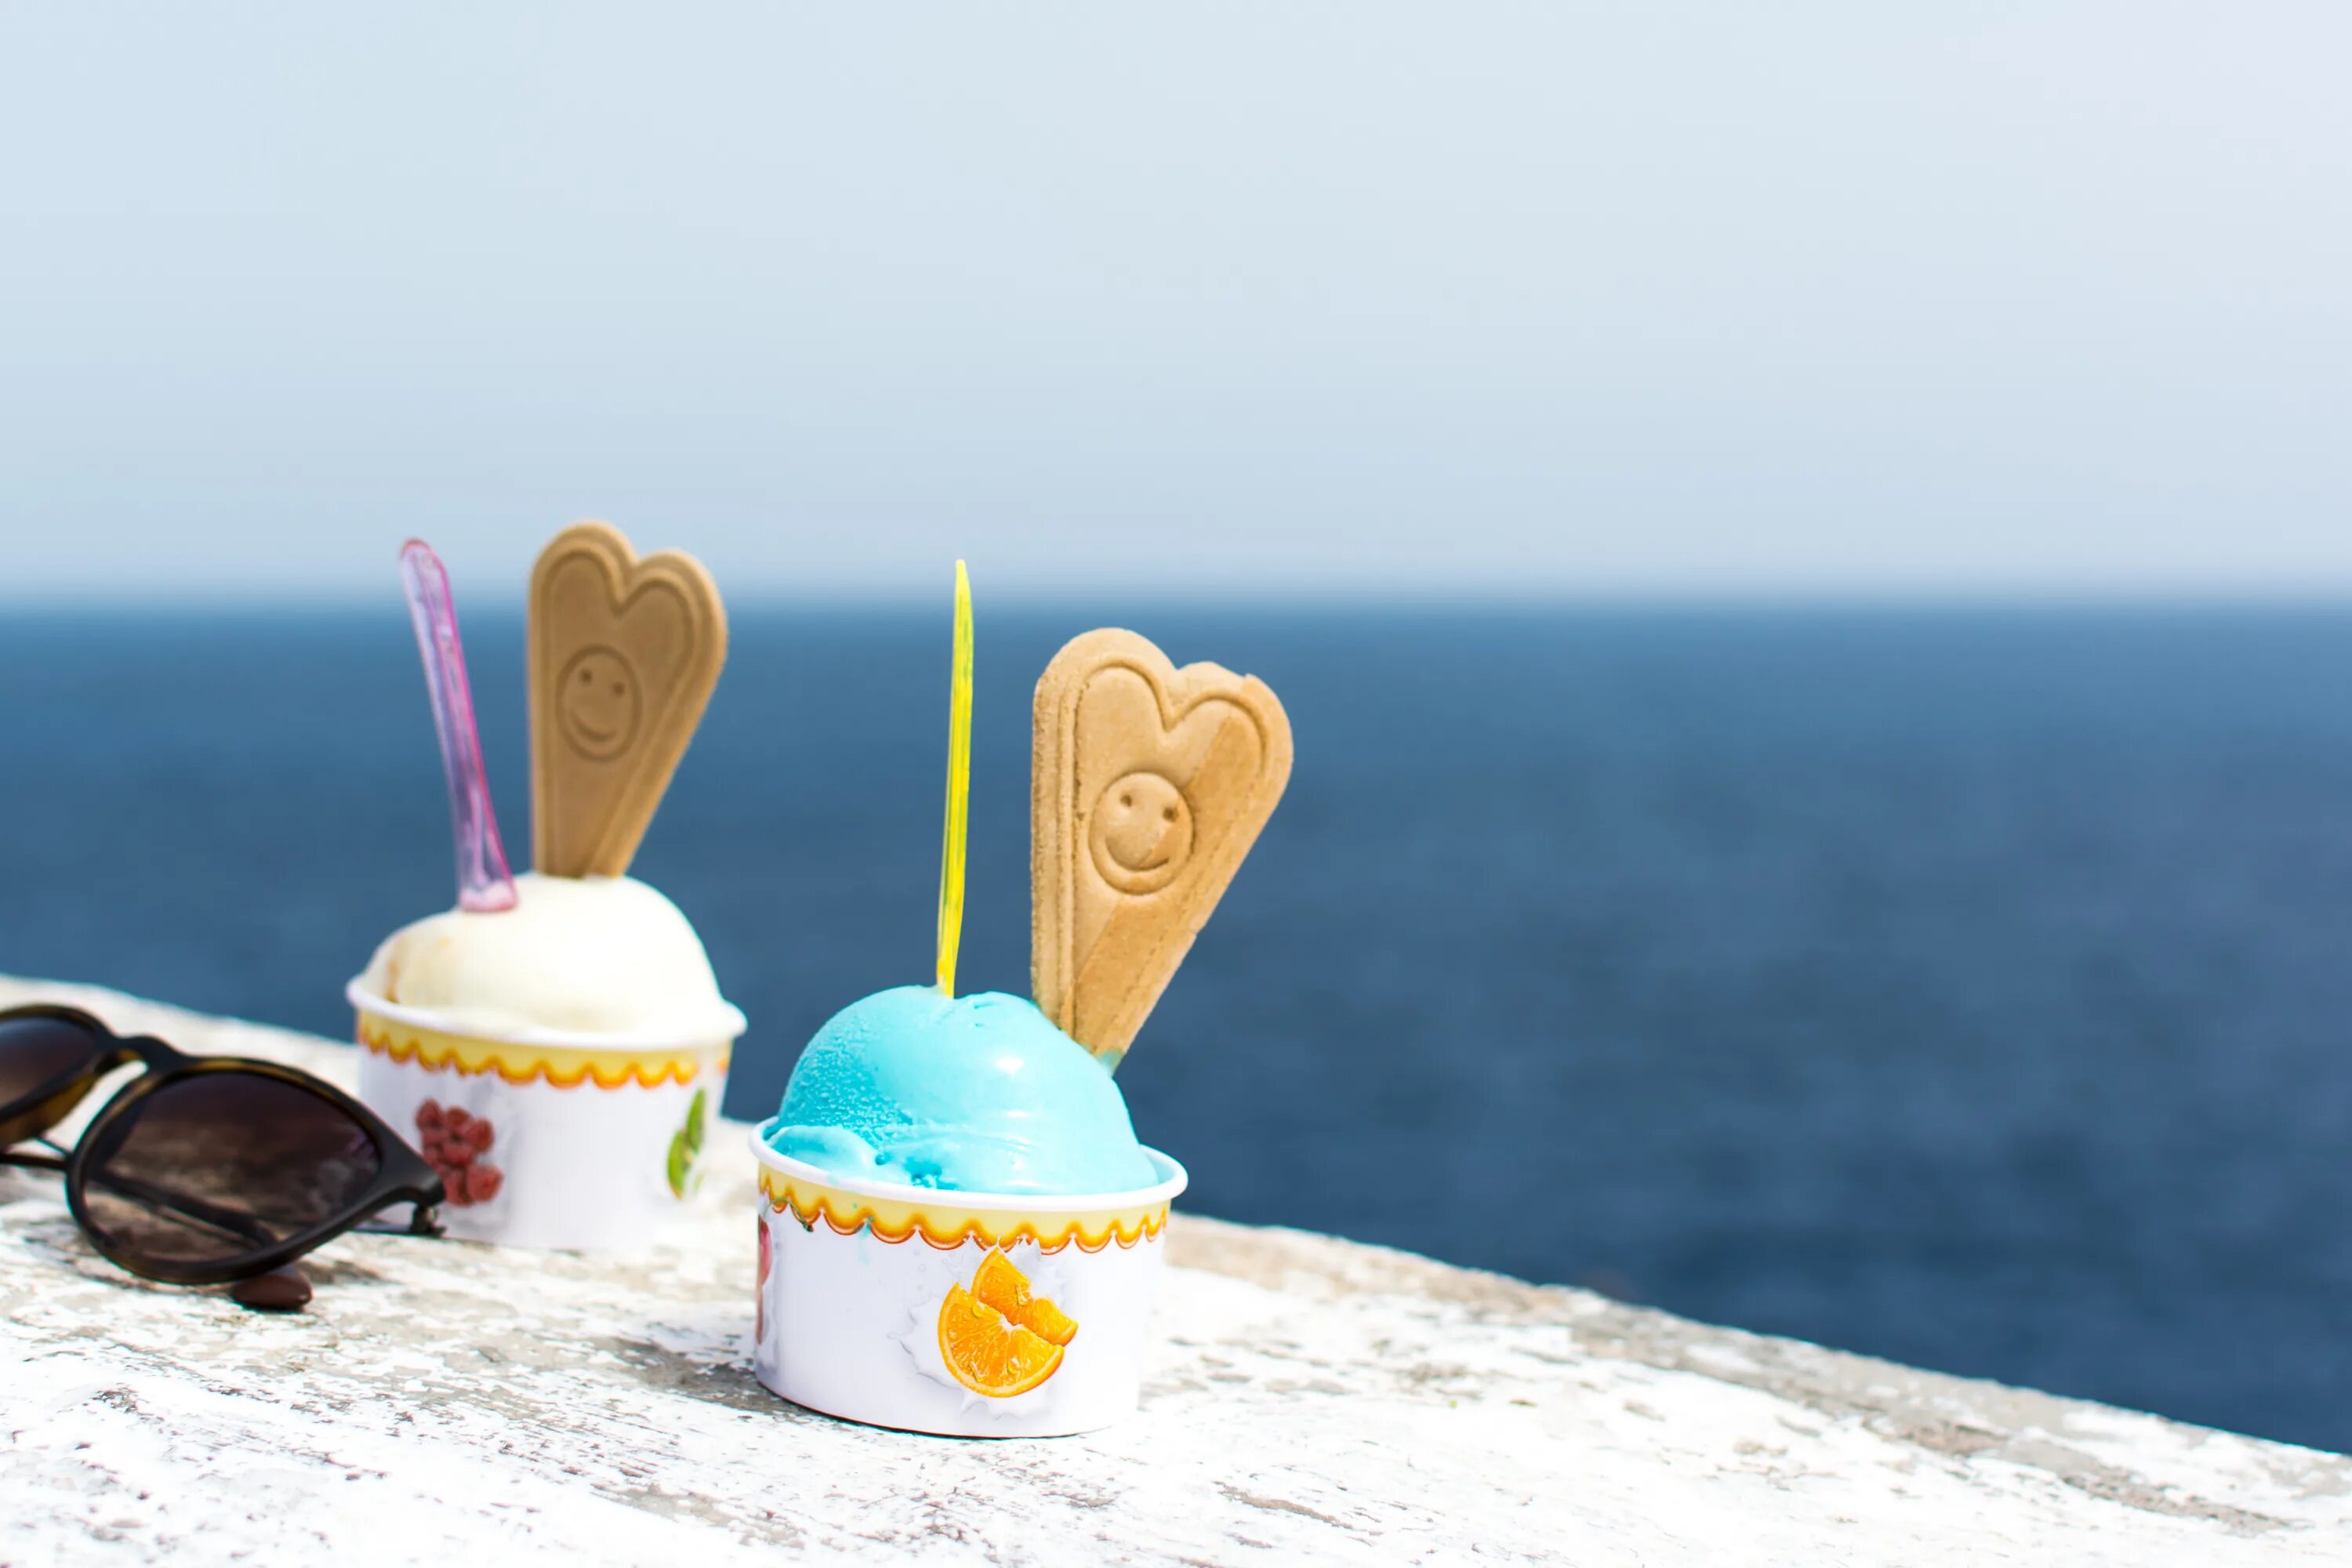 Сладости с моря. Море десертов. Мороженое на море. Морские сладости. Мороженое лето.